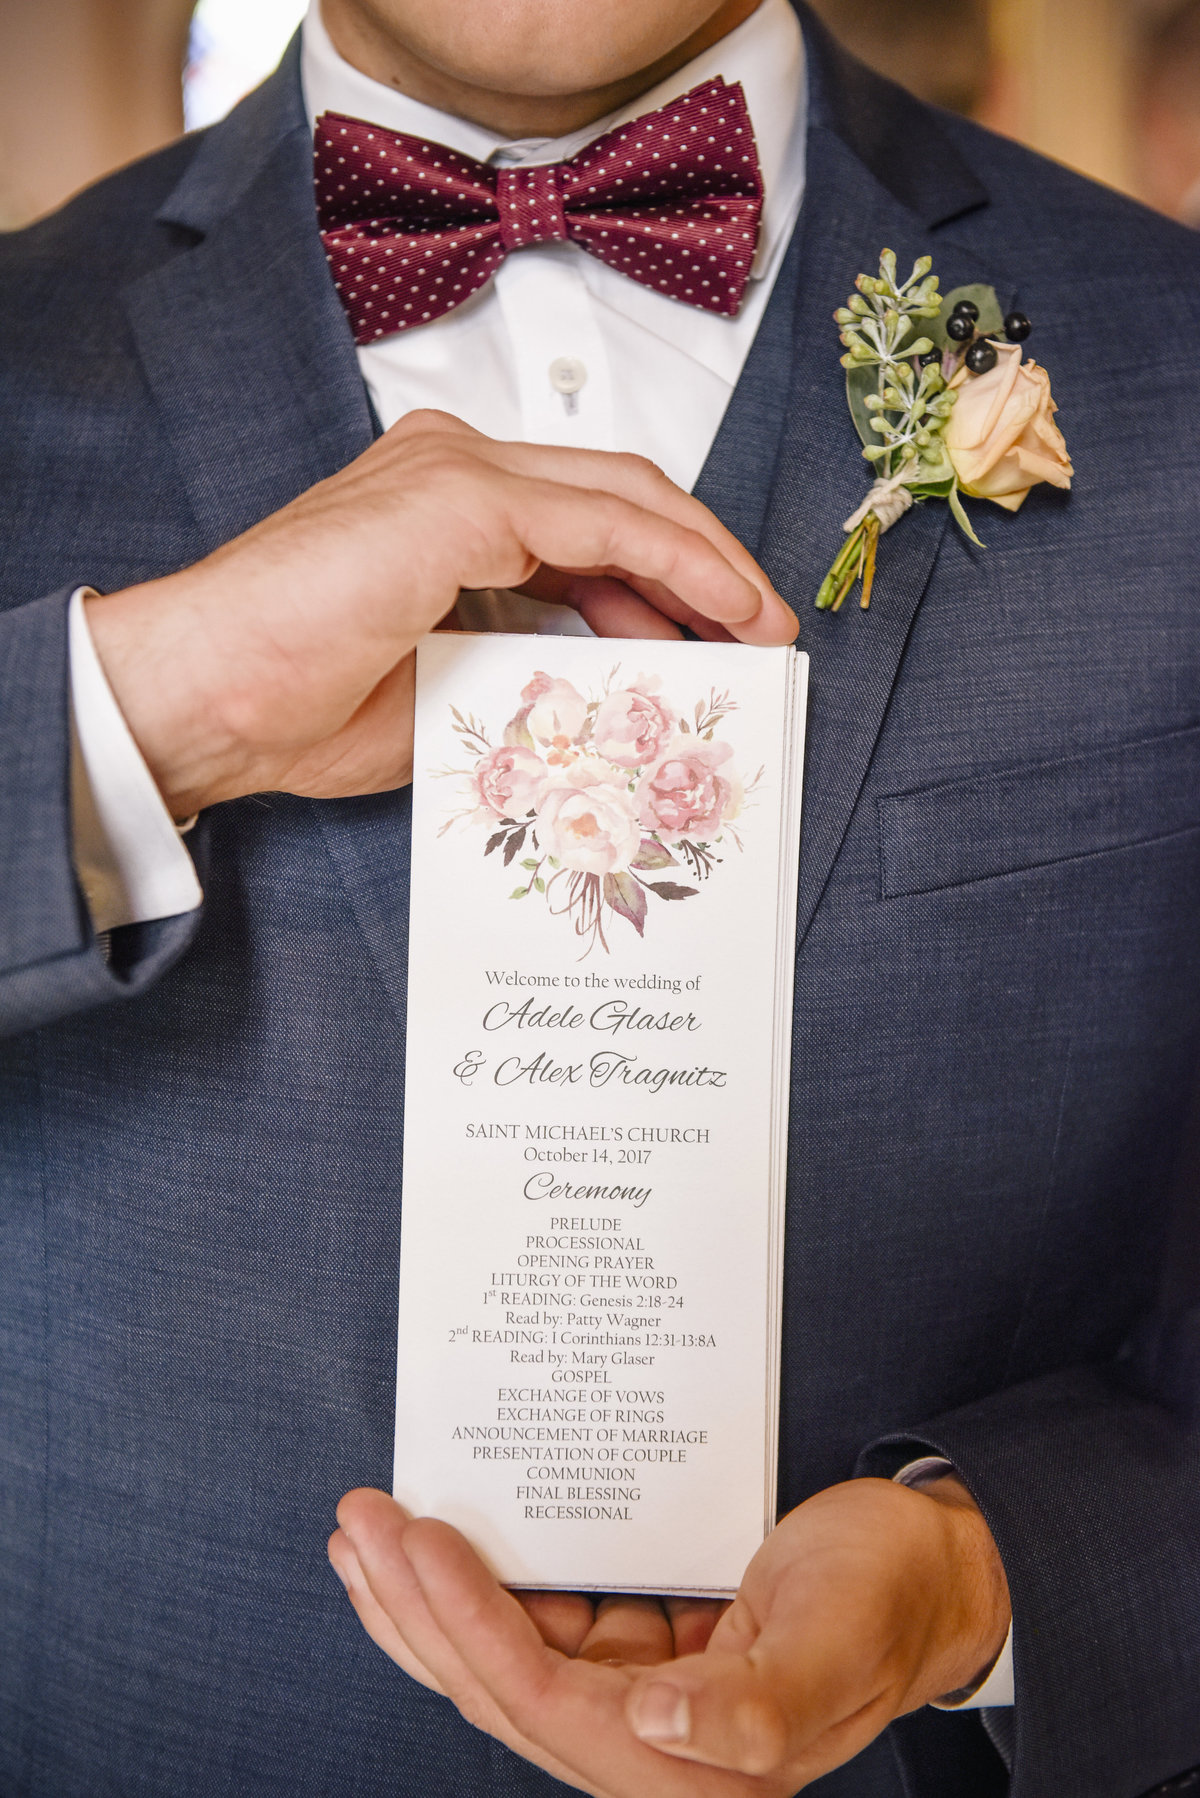 groomsman holding program for wedding ceremony